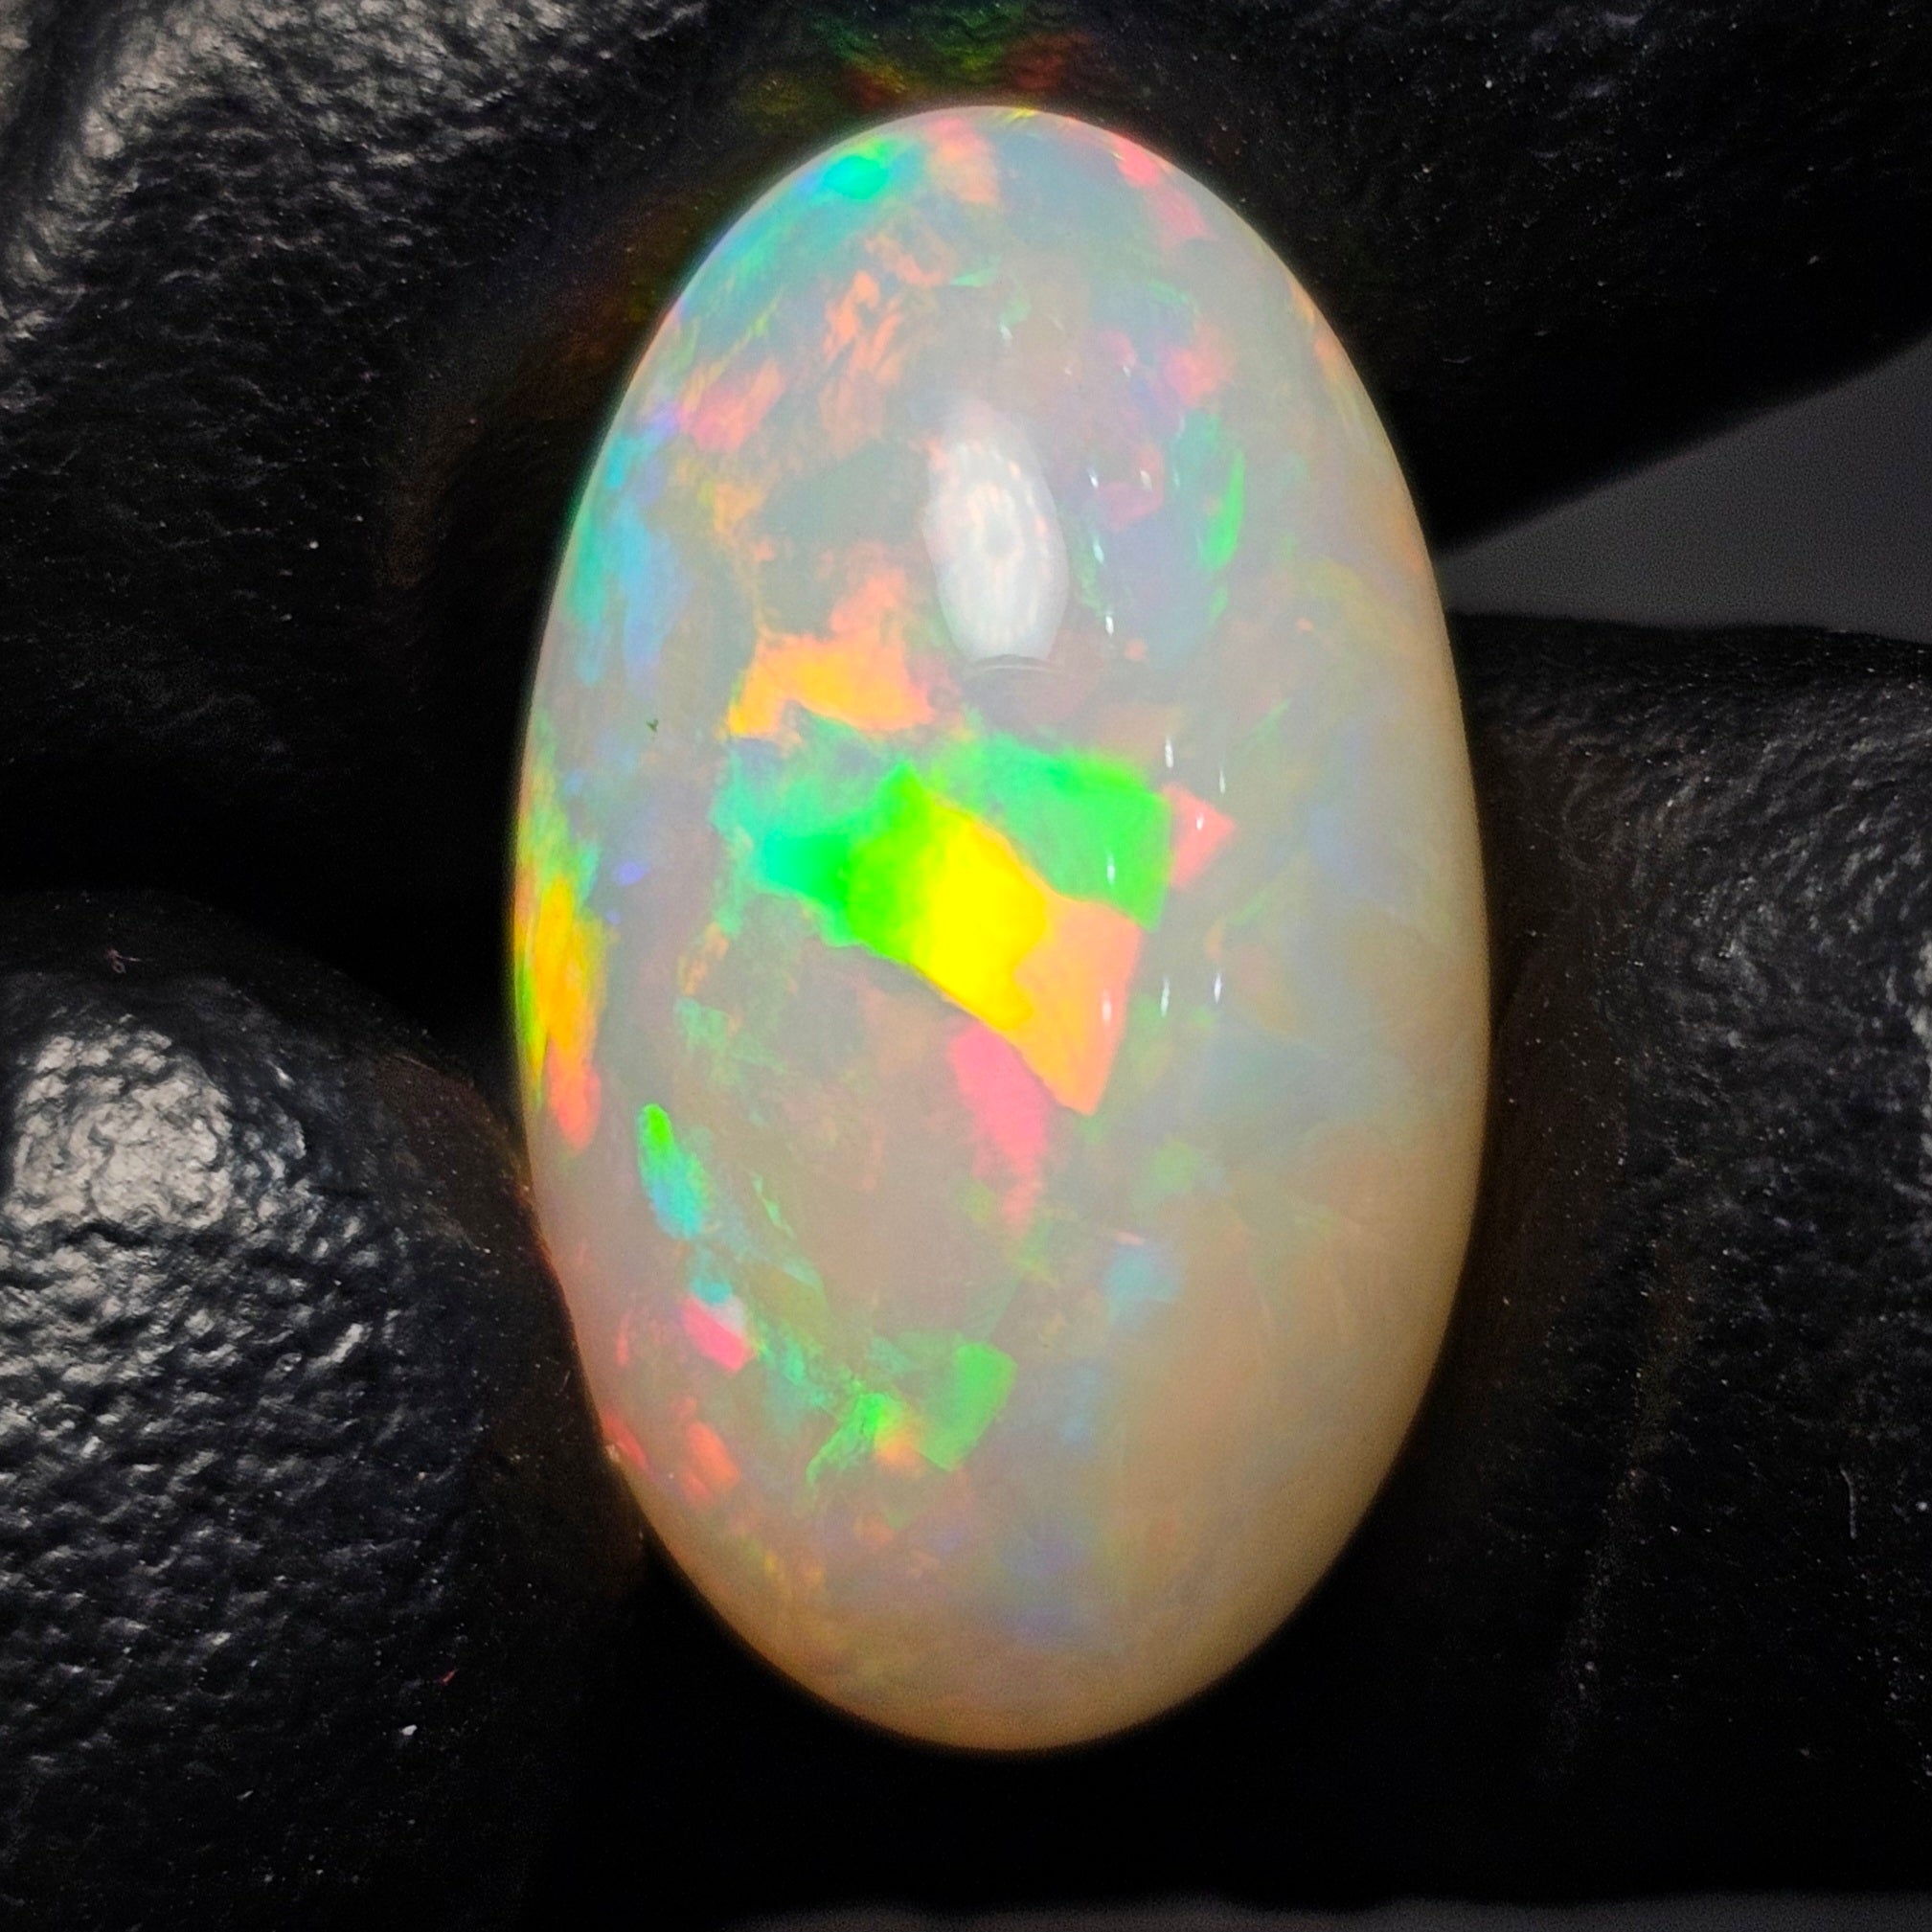 1 Pcs Of Natural Ethopian Opal Oval Shape  |WT: 12.6 Cts|Size: 21X13mm - The LabradoriteKing